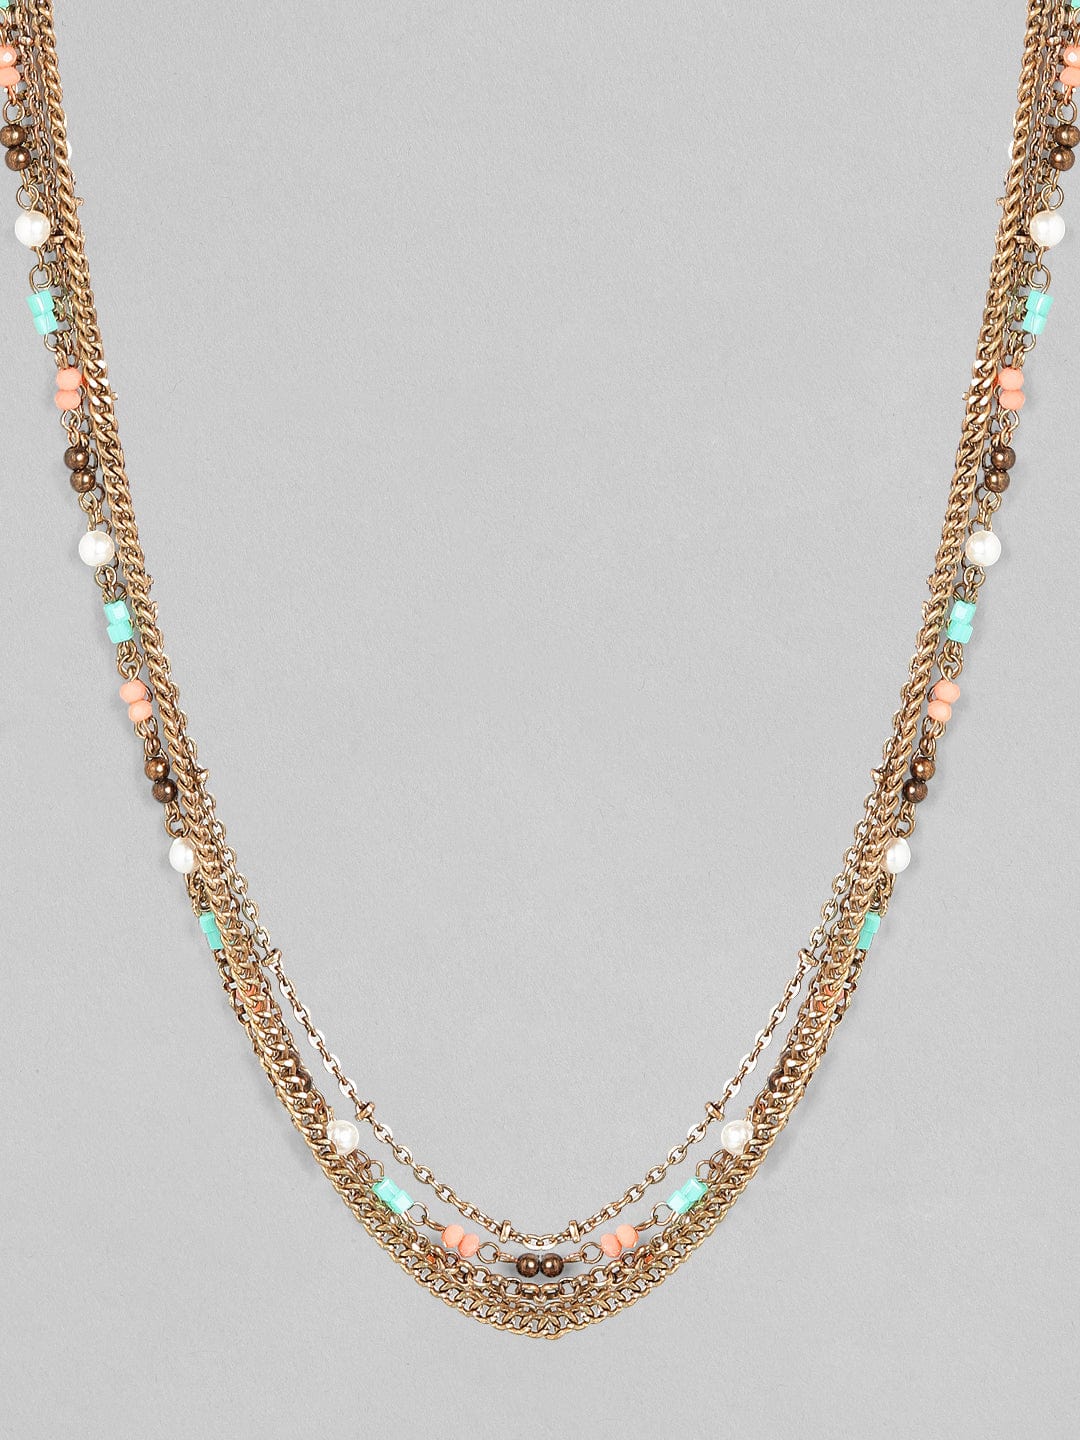 Rubans Voguish Antique Polish Multi coloured layered necklace. Chain & Necklaces